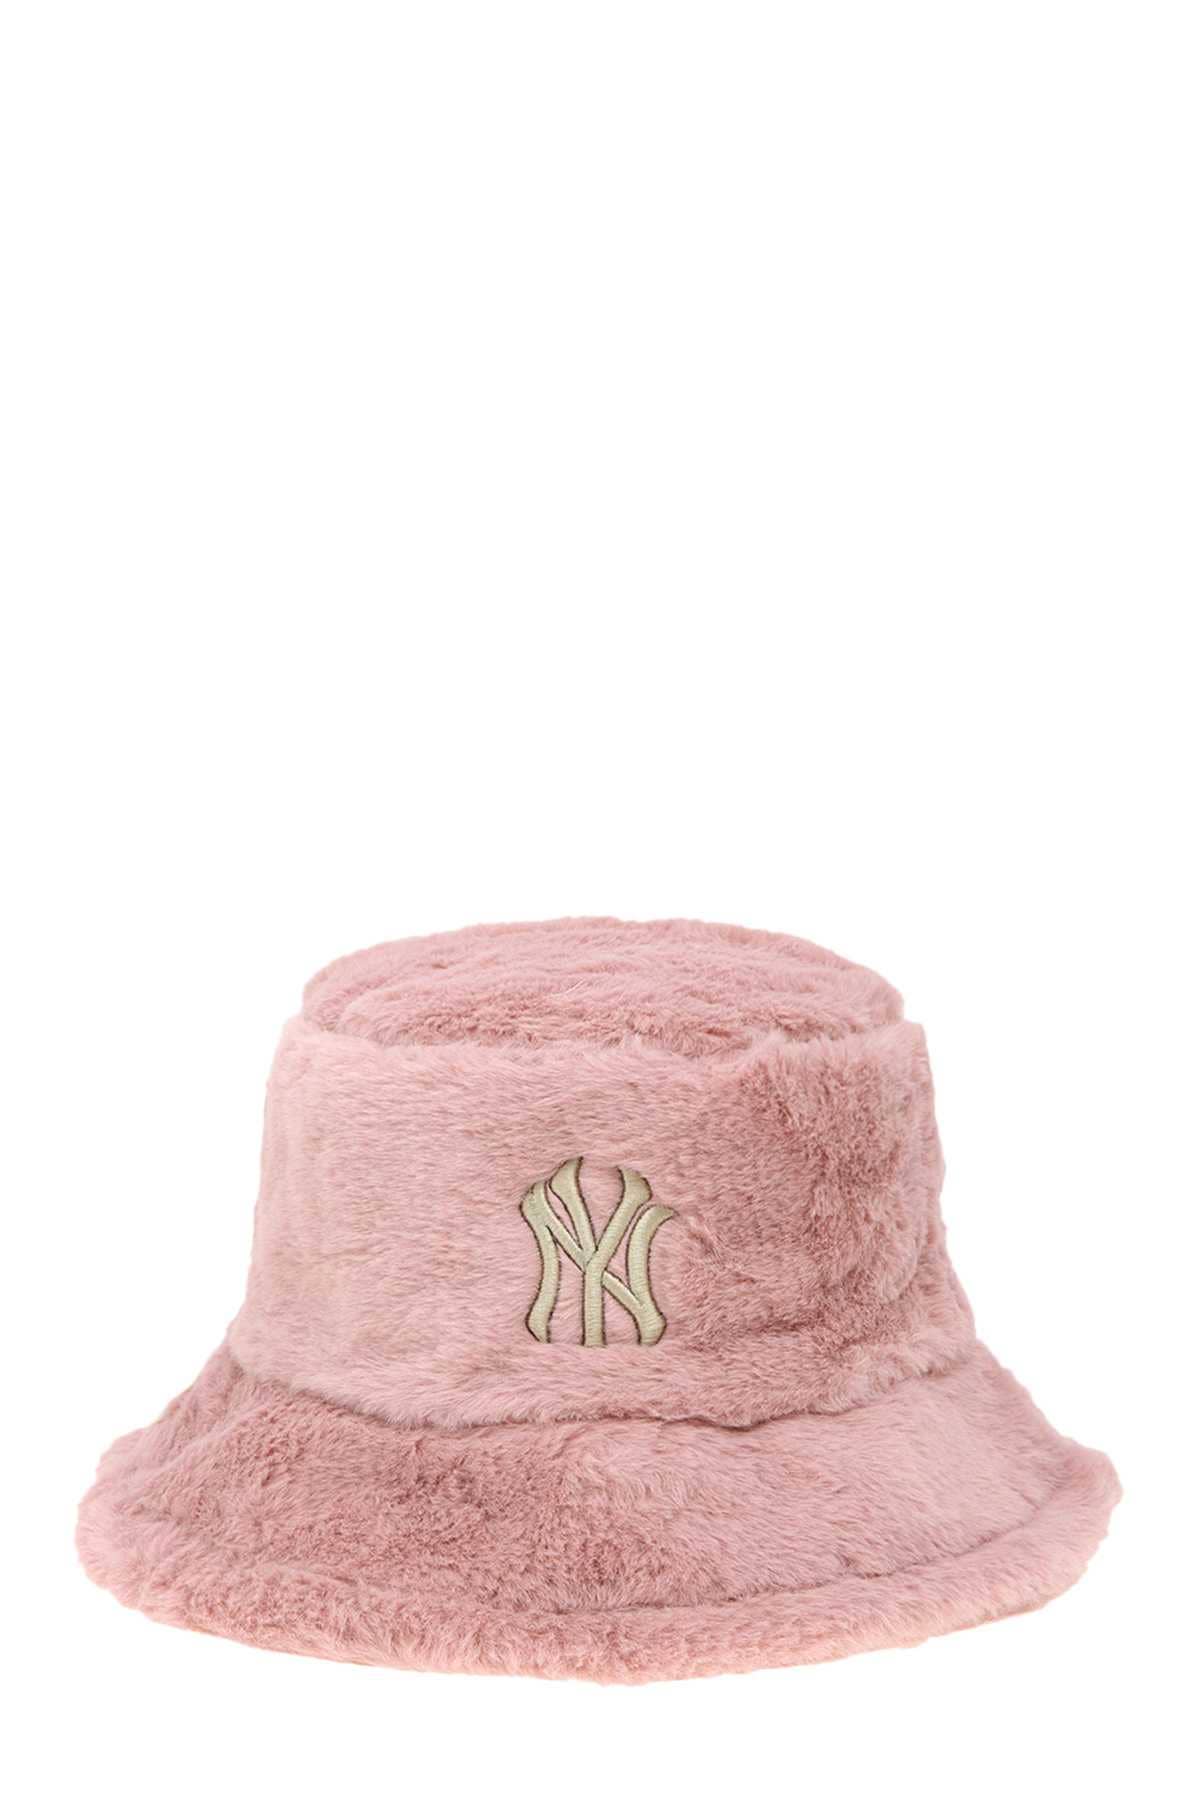 NY Embroidery Fur Bucket Hat